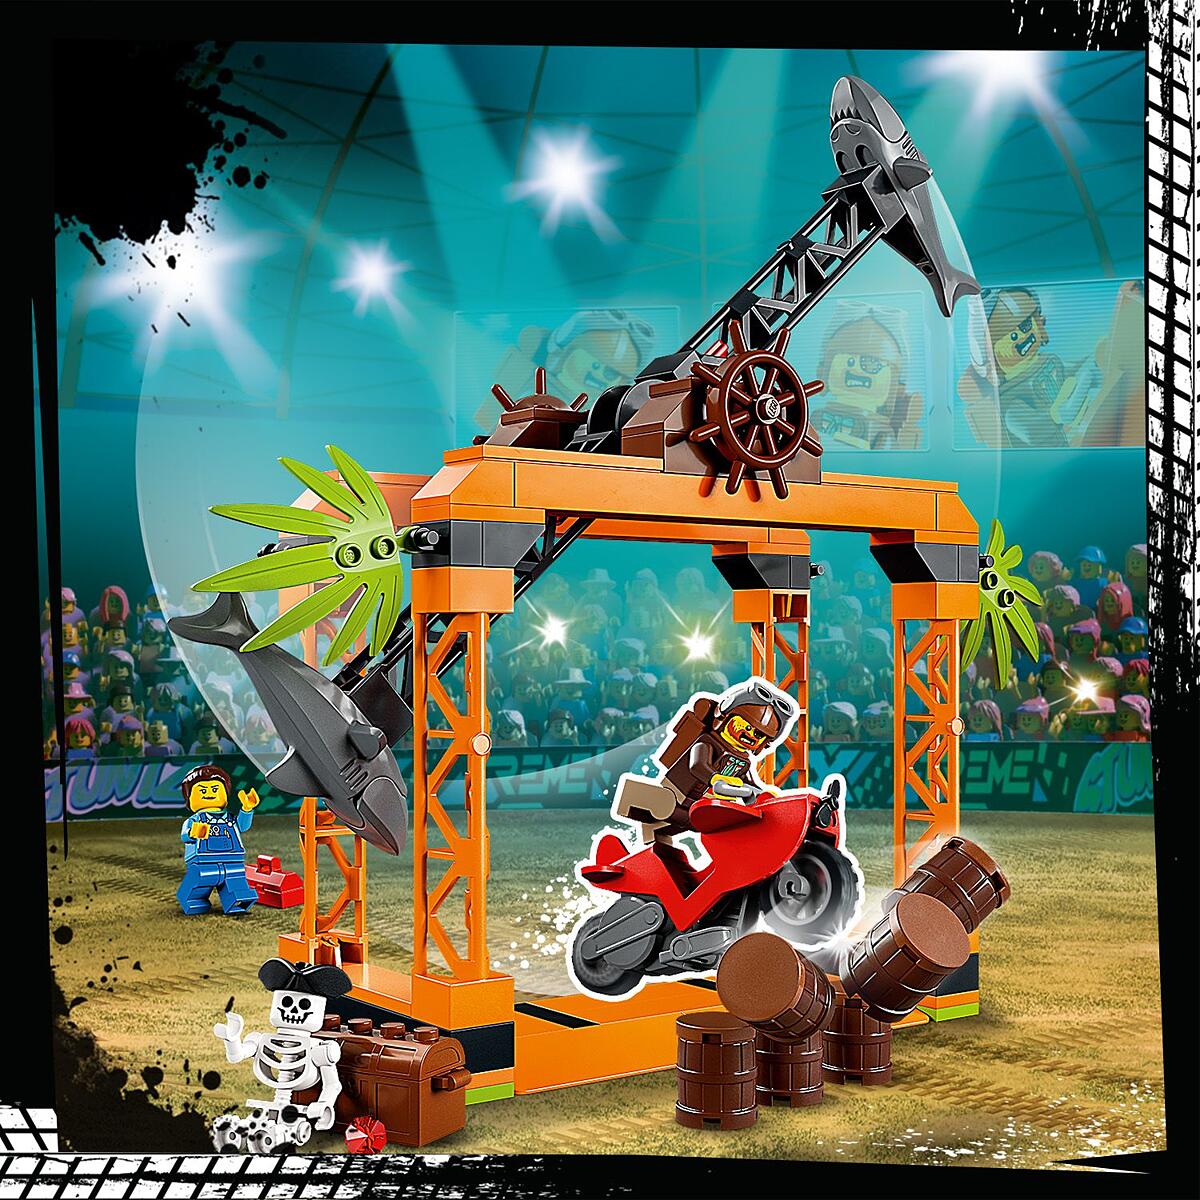 Pirate-themed stunt challenge